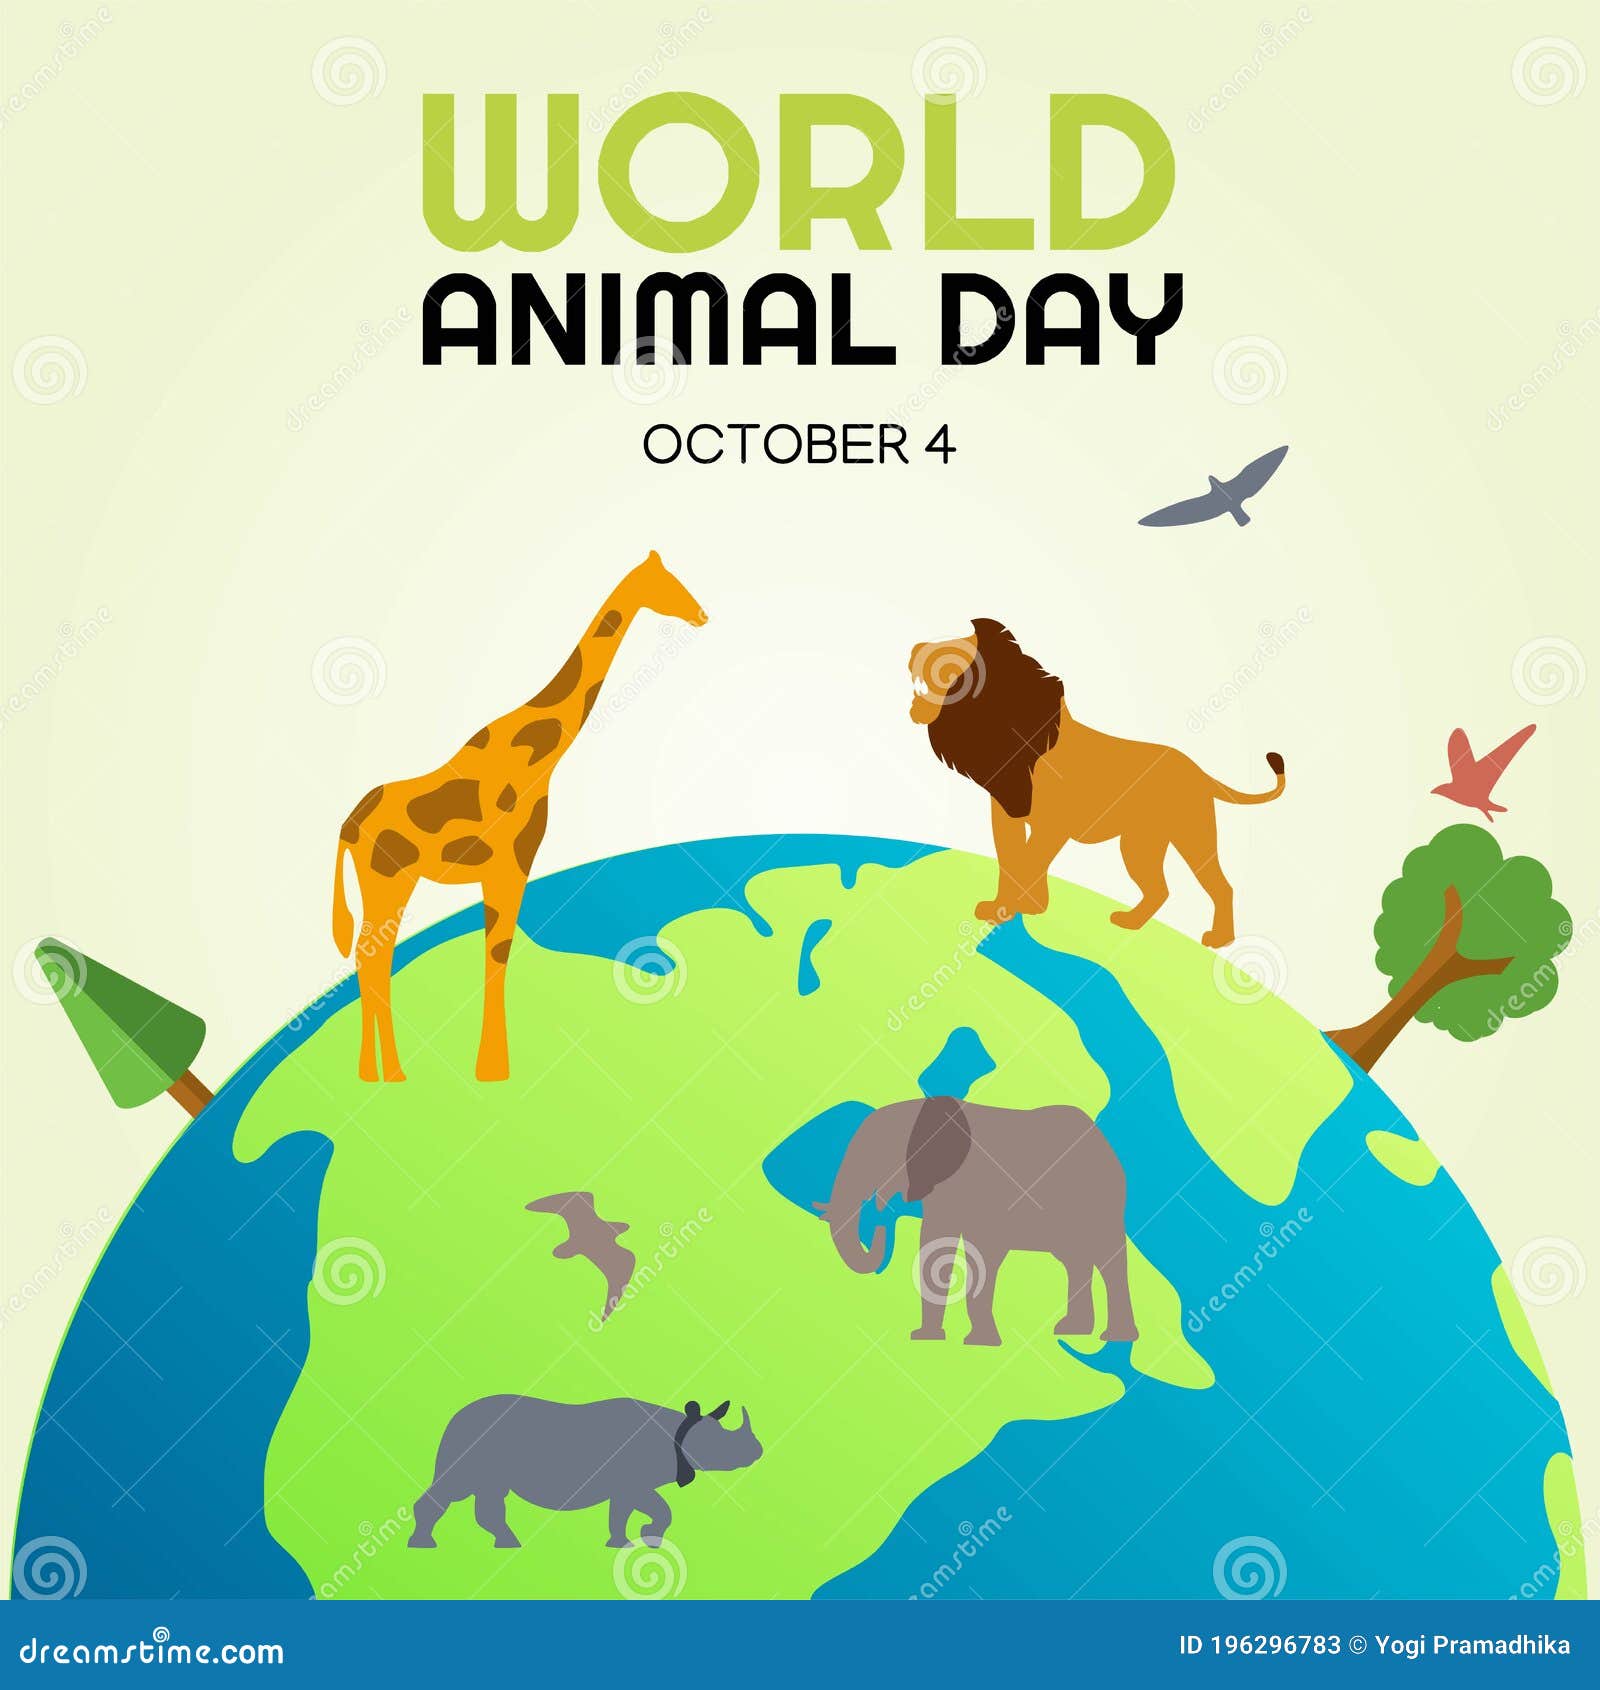 World Animal Day Vector Illustration Stock Vector - Illustration of animal,  graphic: 196296783